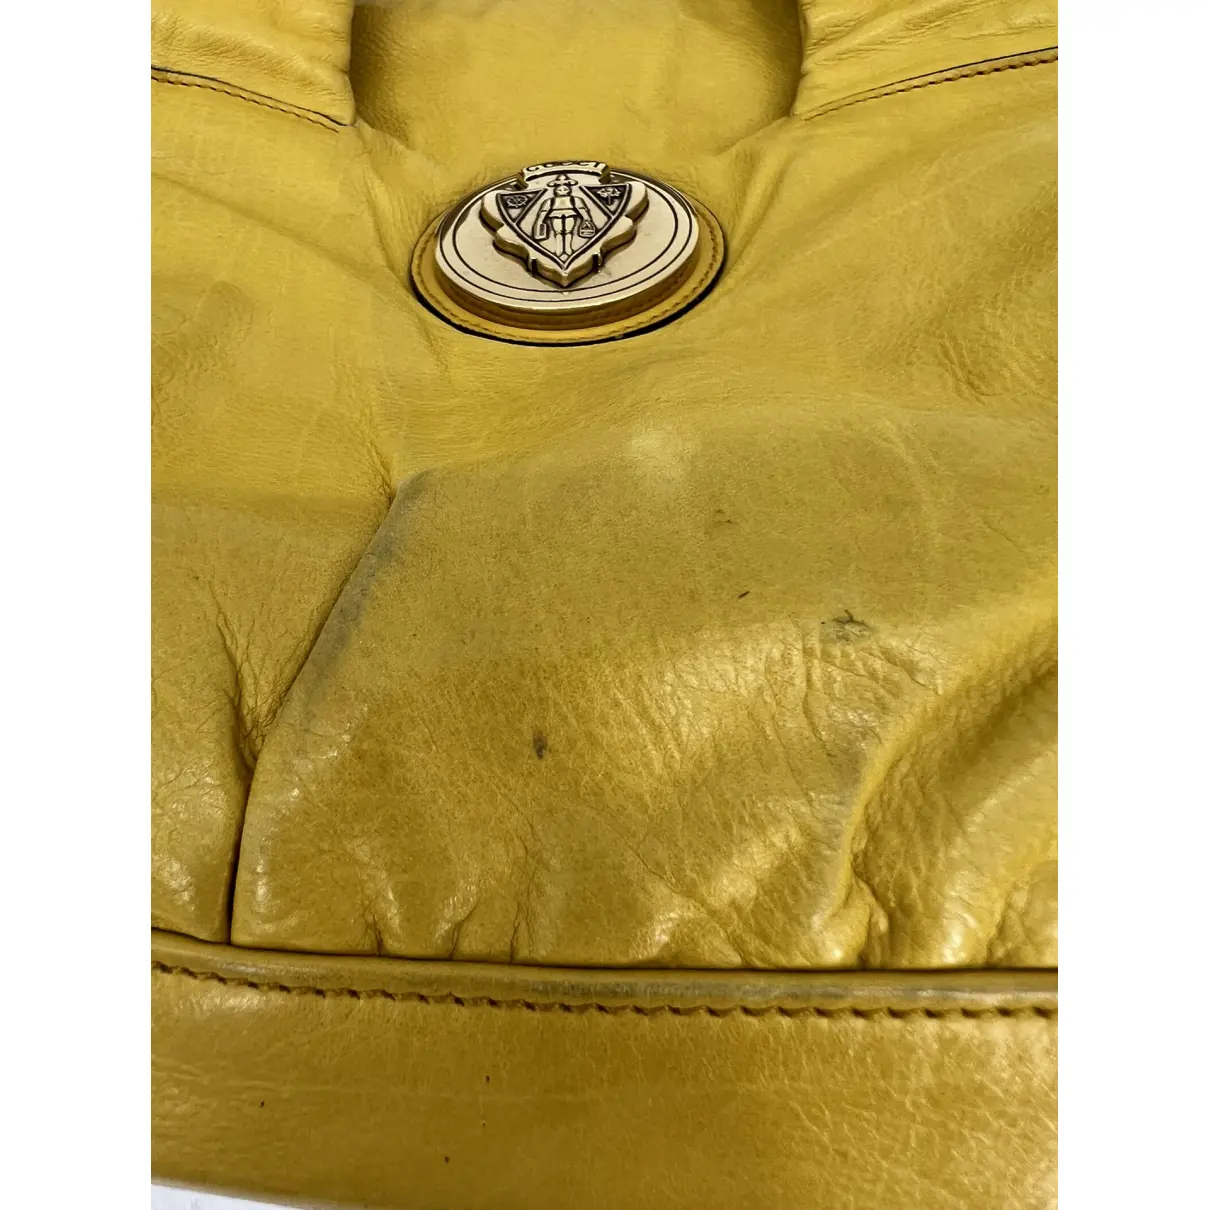 Buy Gucci Pony-style calfskin handbag online